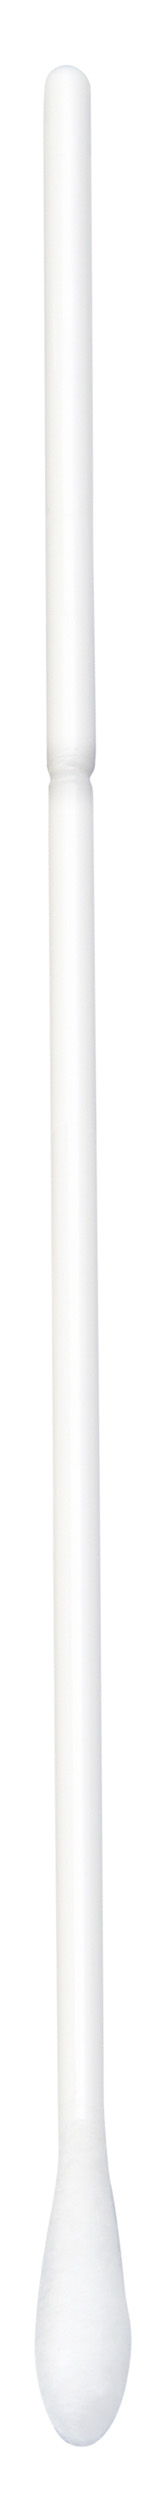 Dry Swabs 1U054S01 Regular Polyester Swab w/ Plastic Applicator with 100mm Breakpoint